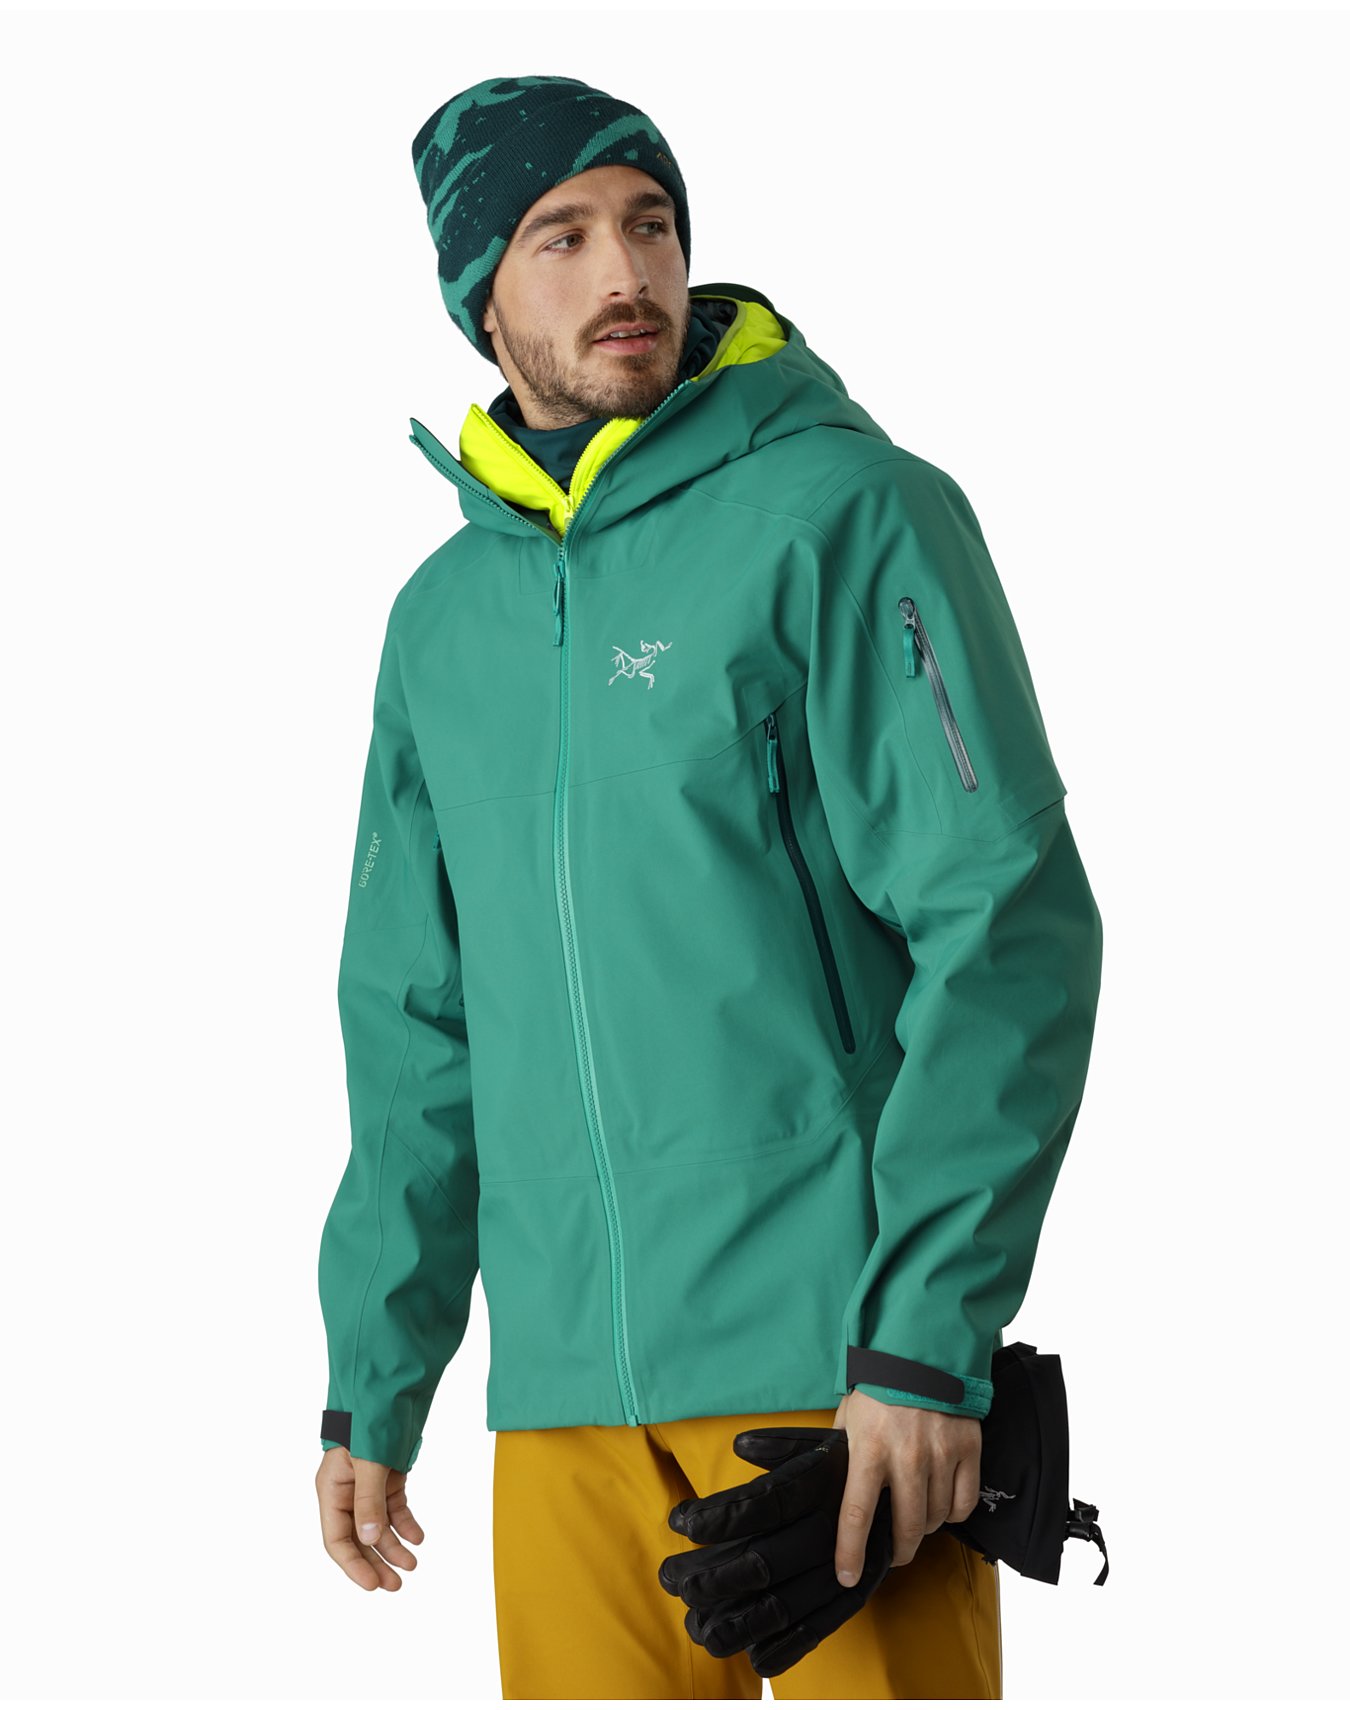 Arc'teryx Sabre AR Jacket, men's, discontinued Fall 2019 model (free ...